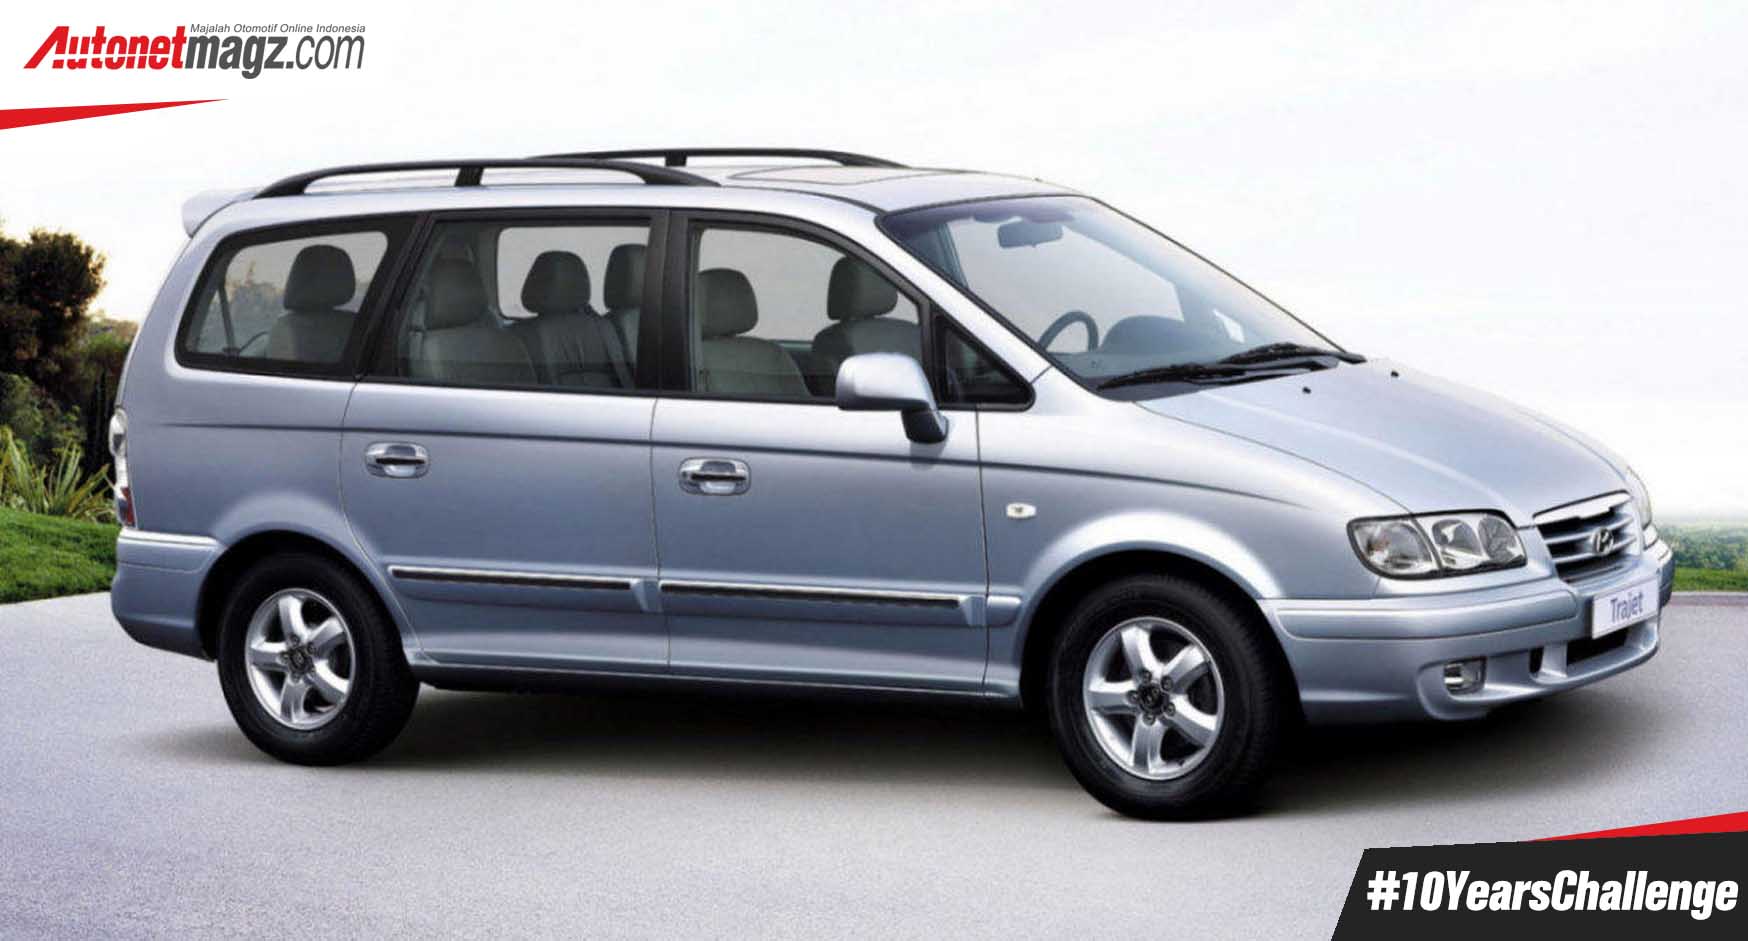 Berita, #10YearsChallenge Hyundai Trajet: #10YearsChallenge : 7 Mobil Berusia 10 Tahun Yang Tinggal Kenangan